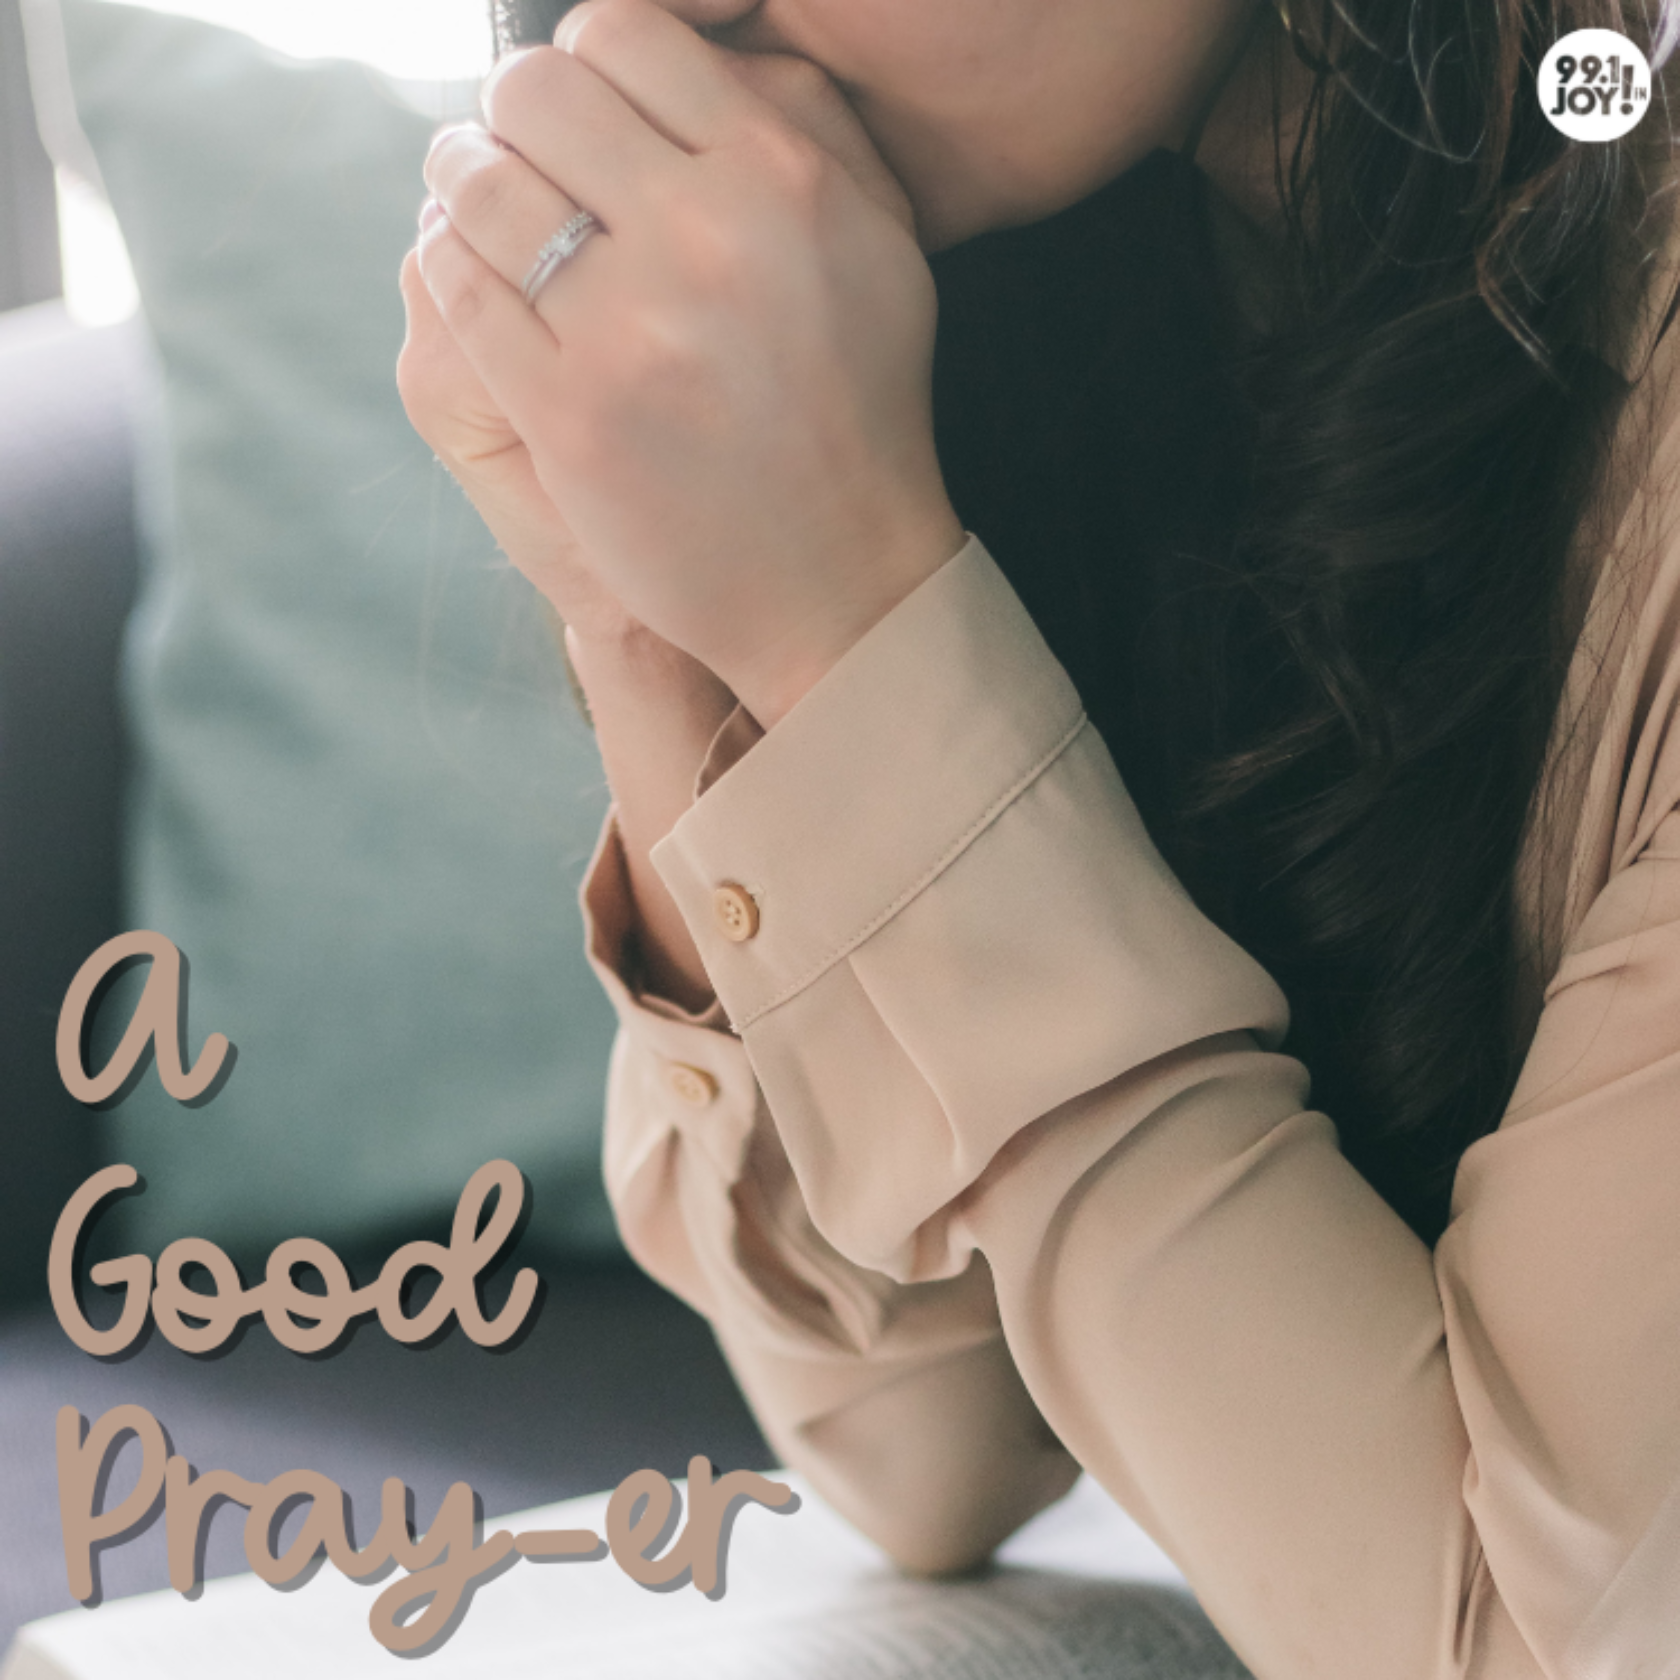 A Good Pray-er